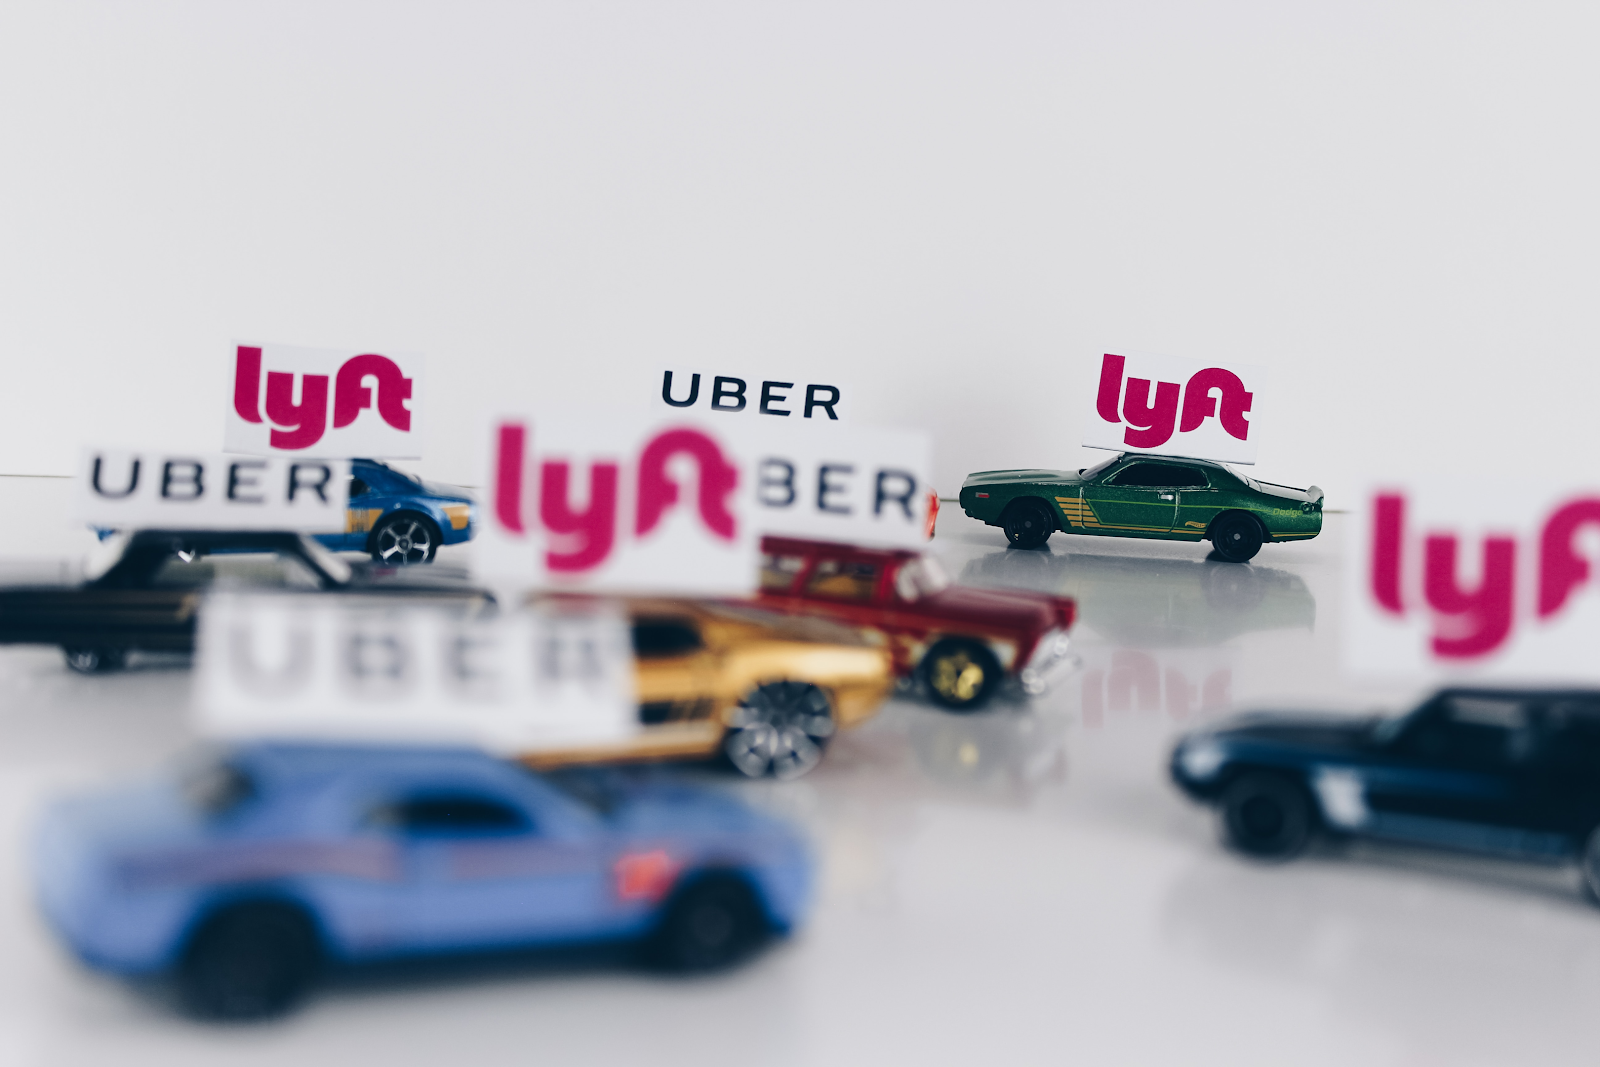 uber and lyft matchbox cars 